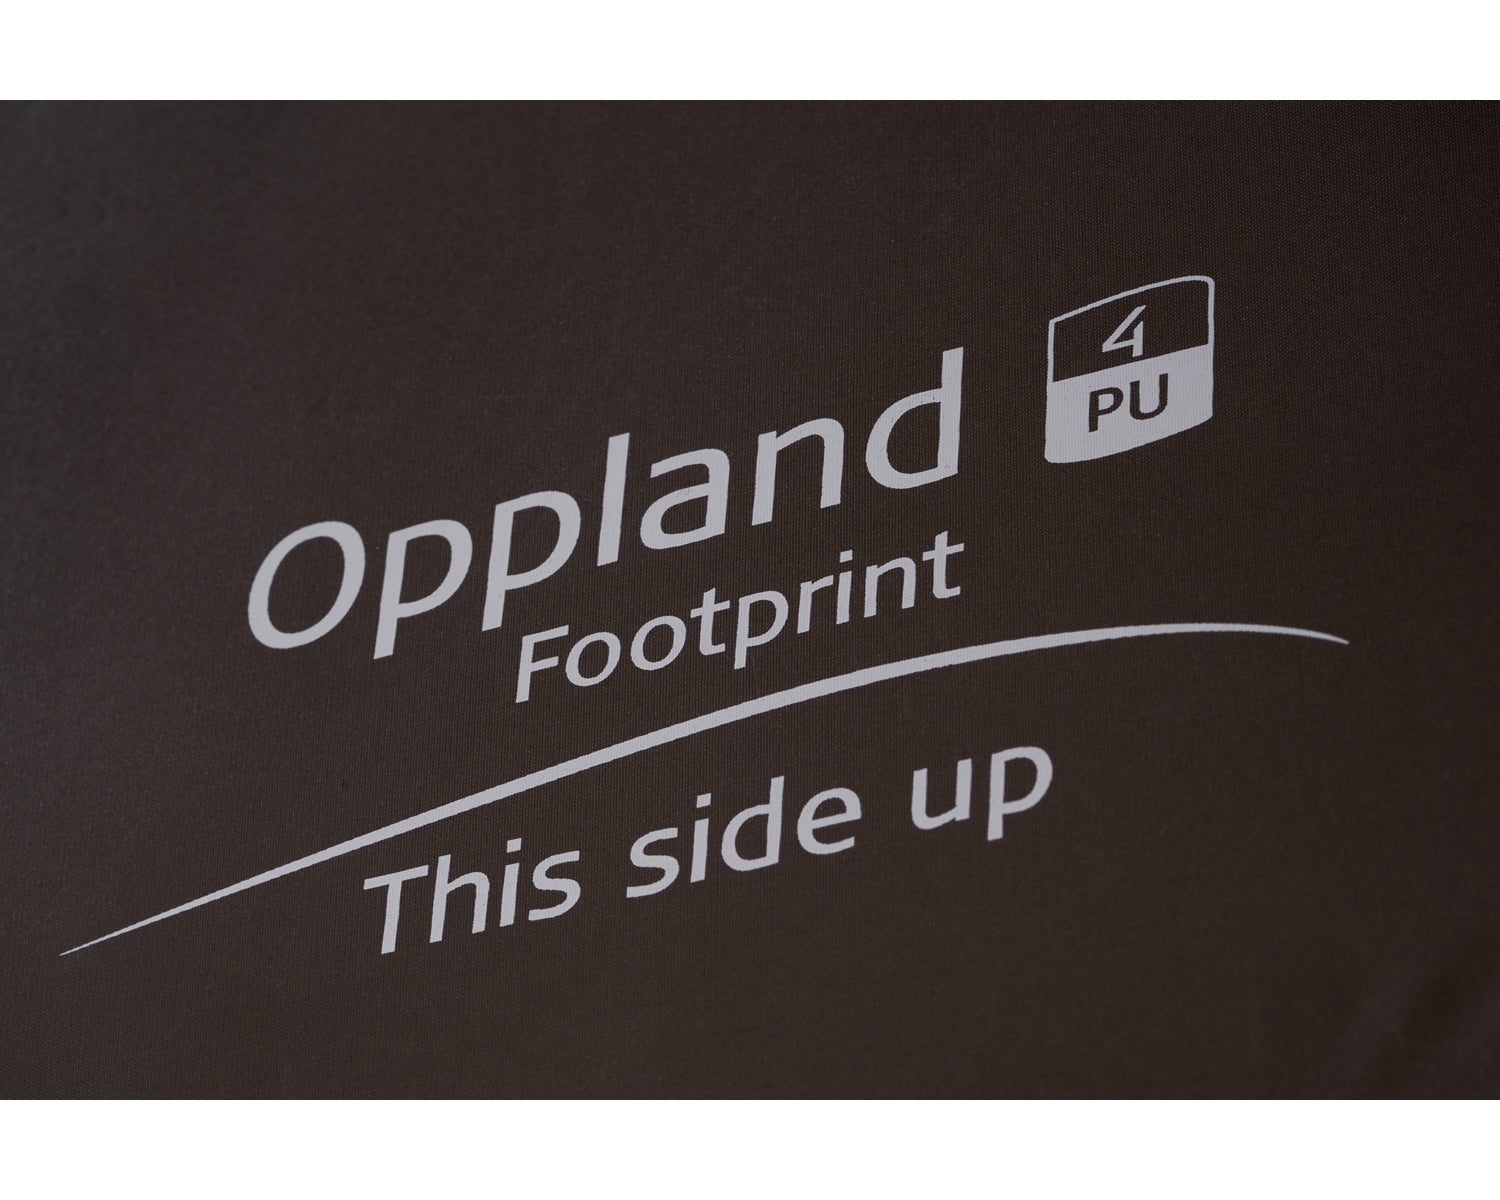 Oppland 4 Footprint - Black